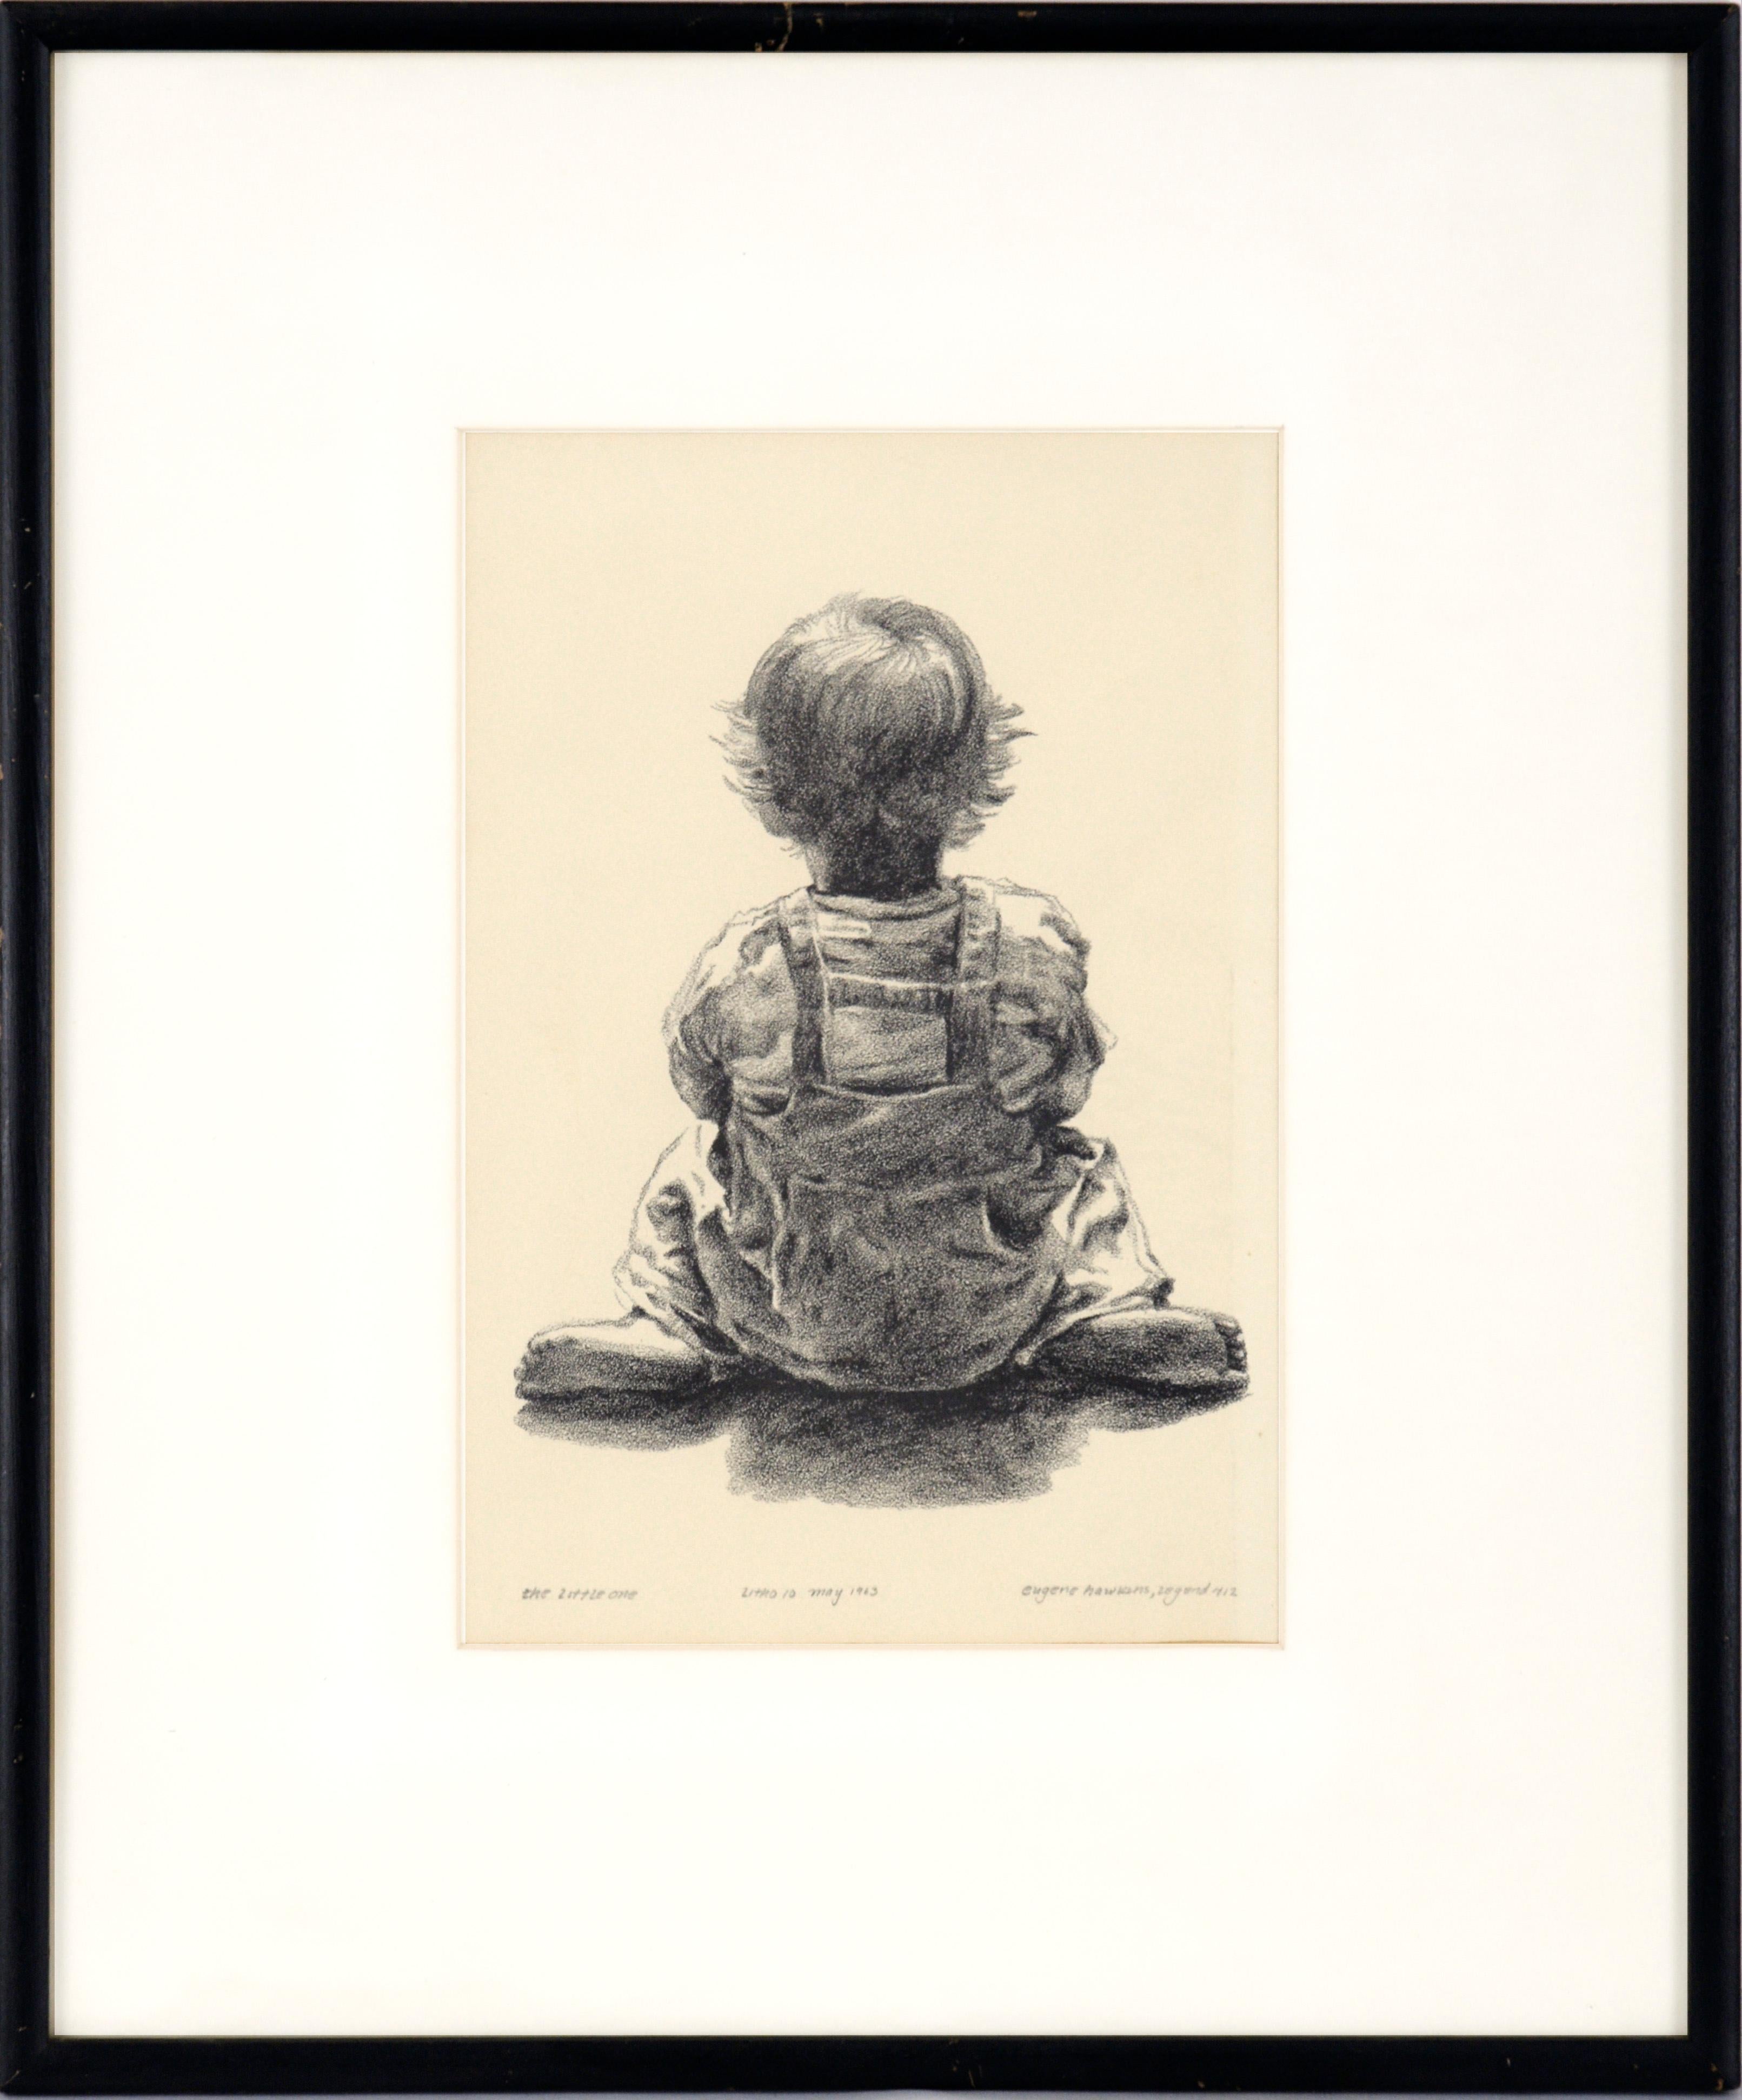 „The Little One“ – Seltene signierte figurative Lithographie in Tinte auf Papier